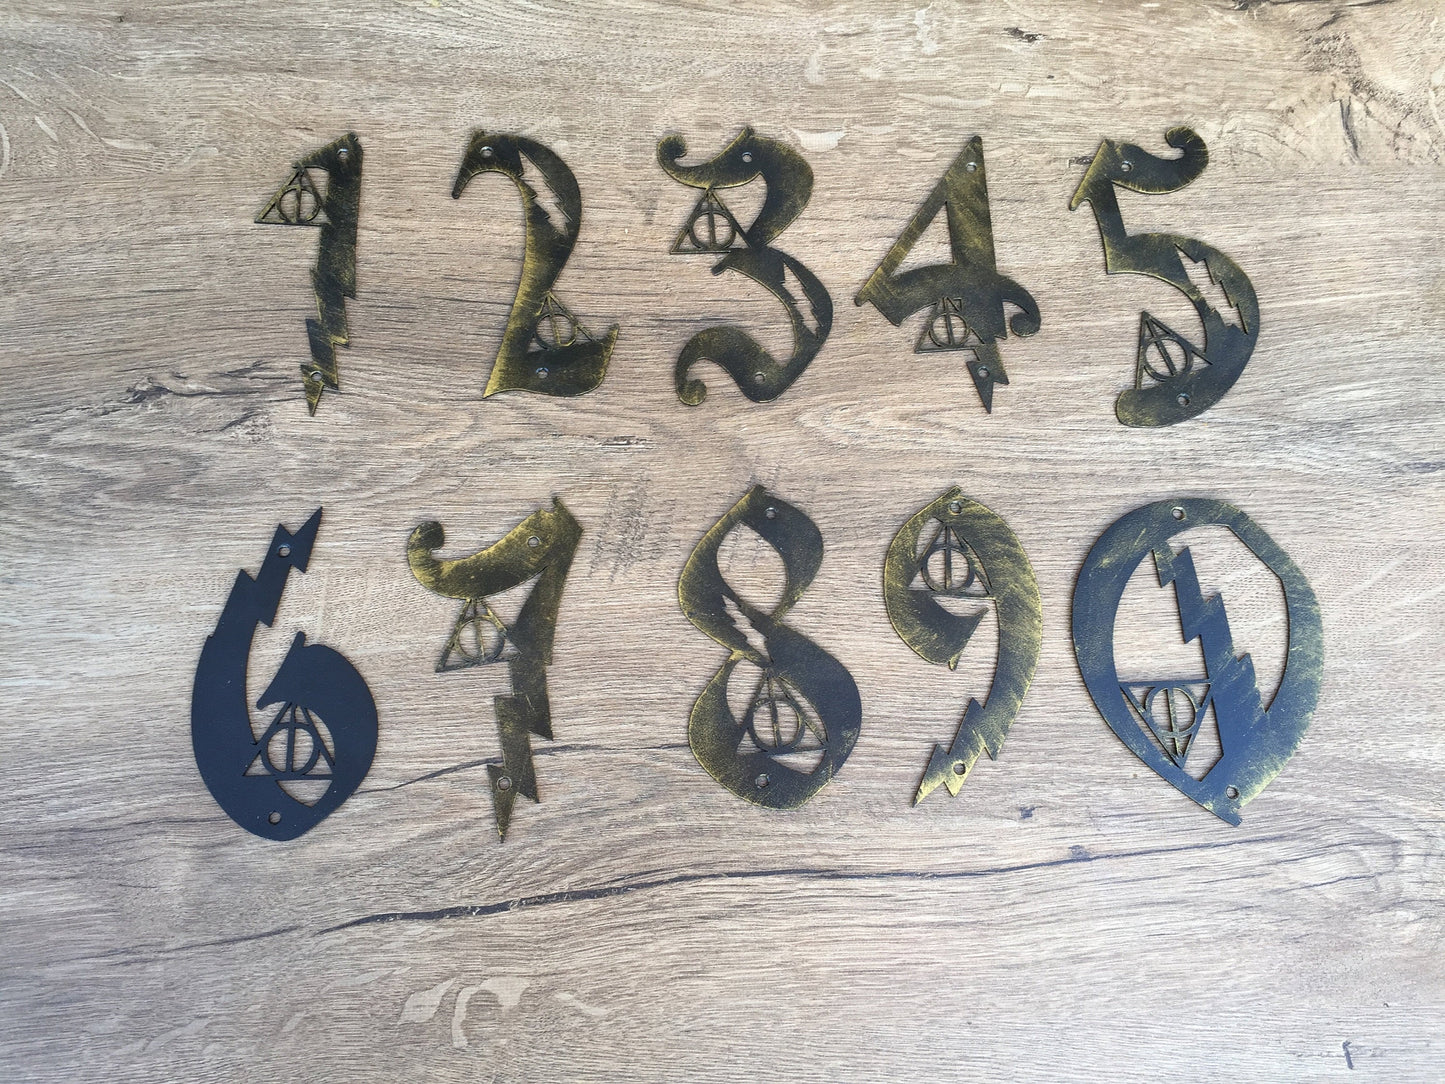 House numbers, door numbers, house number plaque, number sign, iron numbers, metal numbers, signs, door numbers, address sign,address number